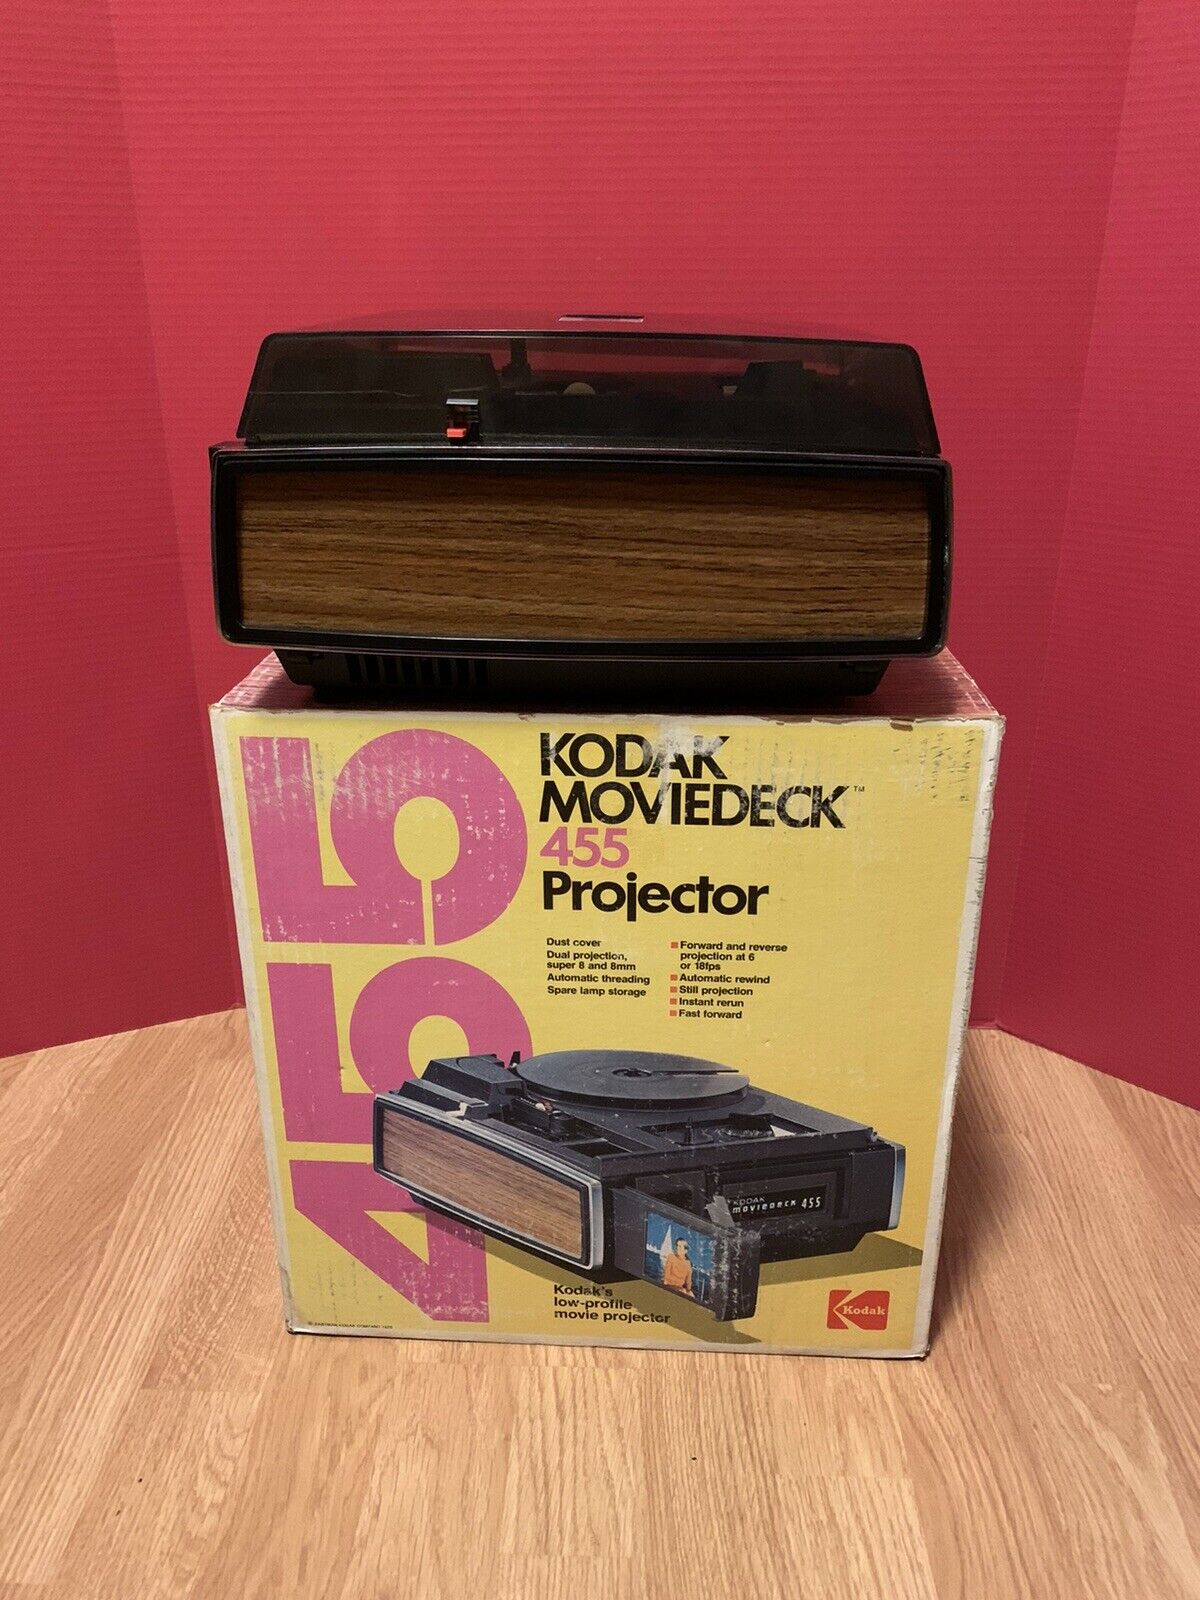 EUC Kodak Moviedeck 455 8mm / Super 8 Movie Projector TESTED vintage compact